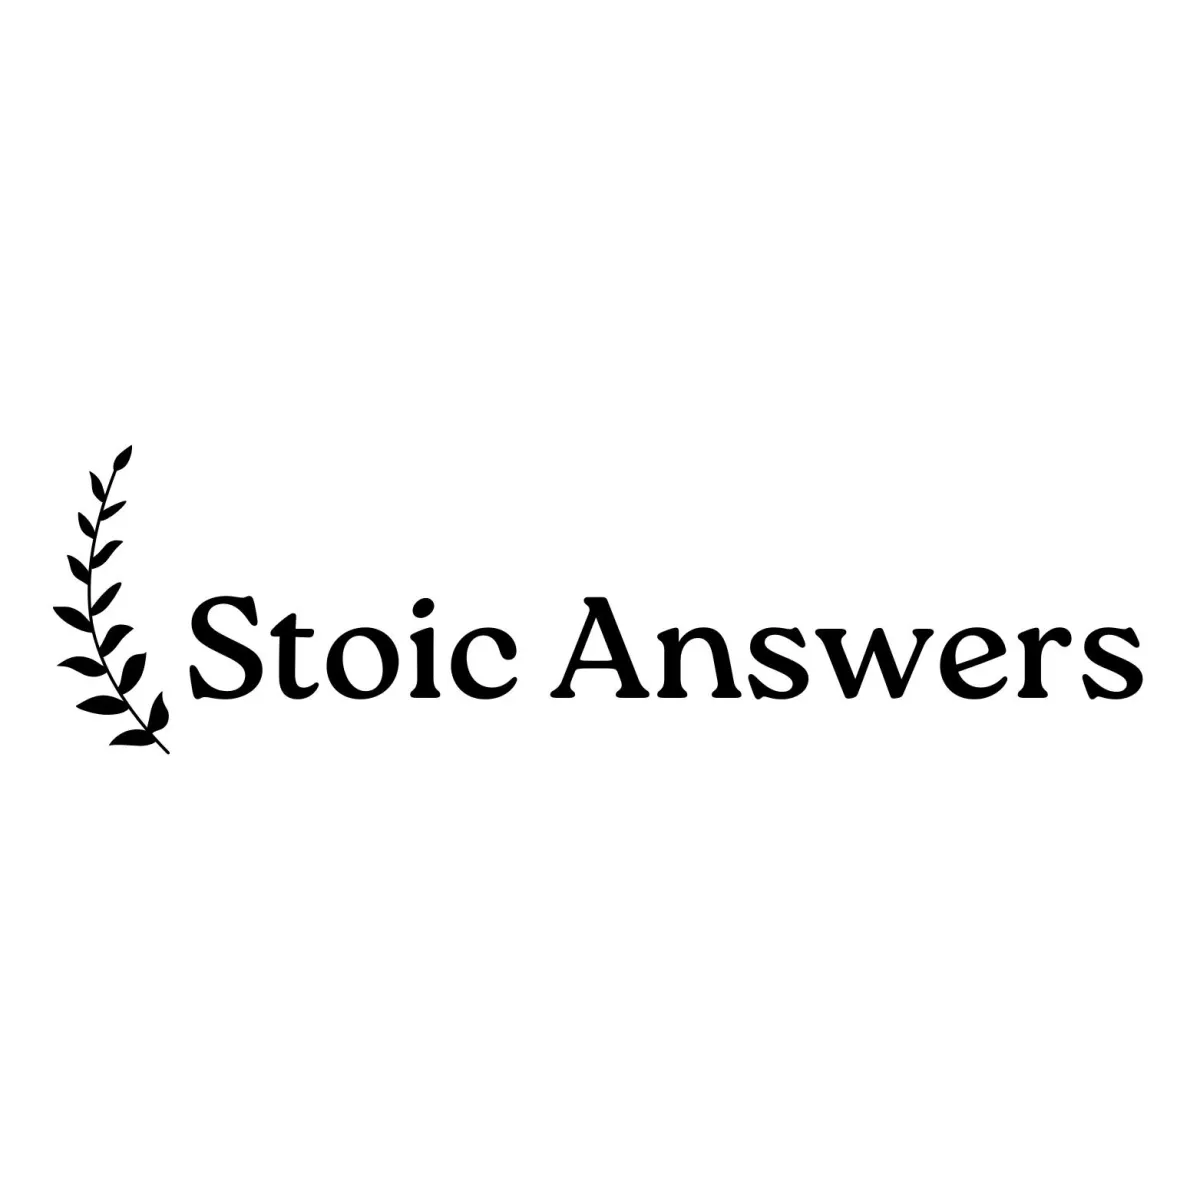 Stoic Answers logo